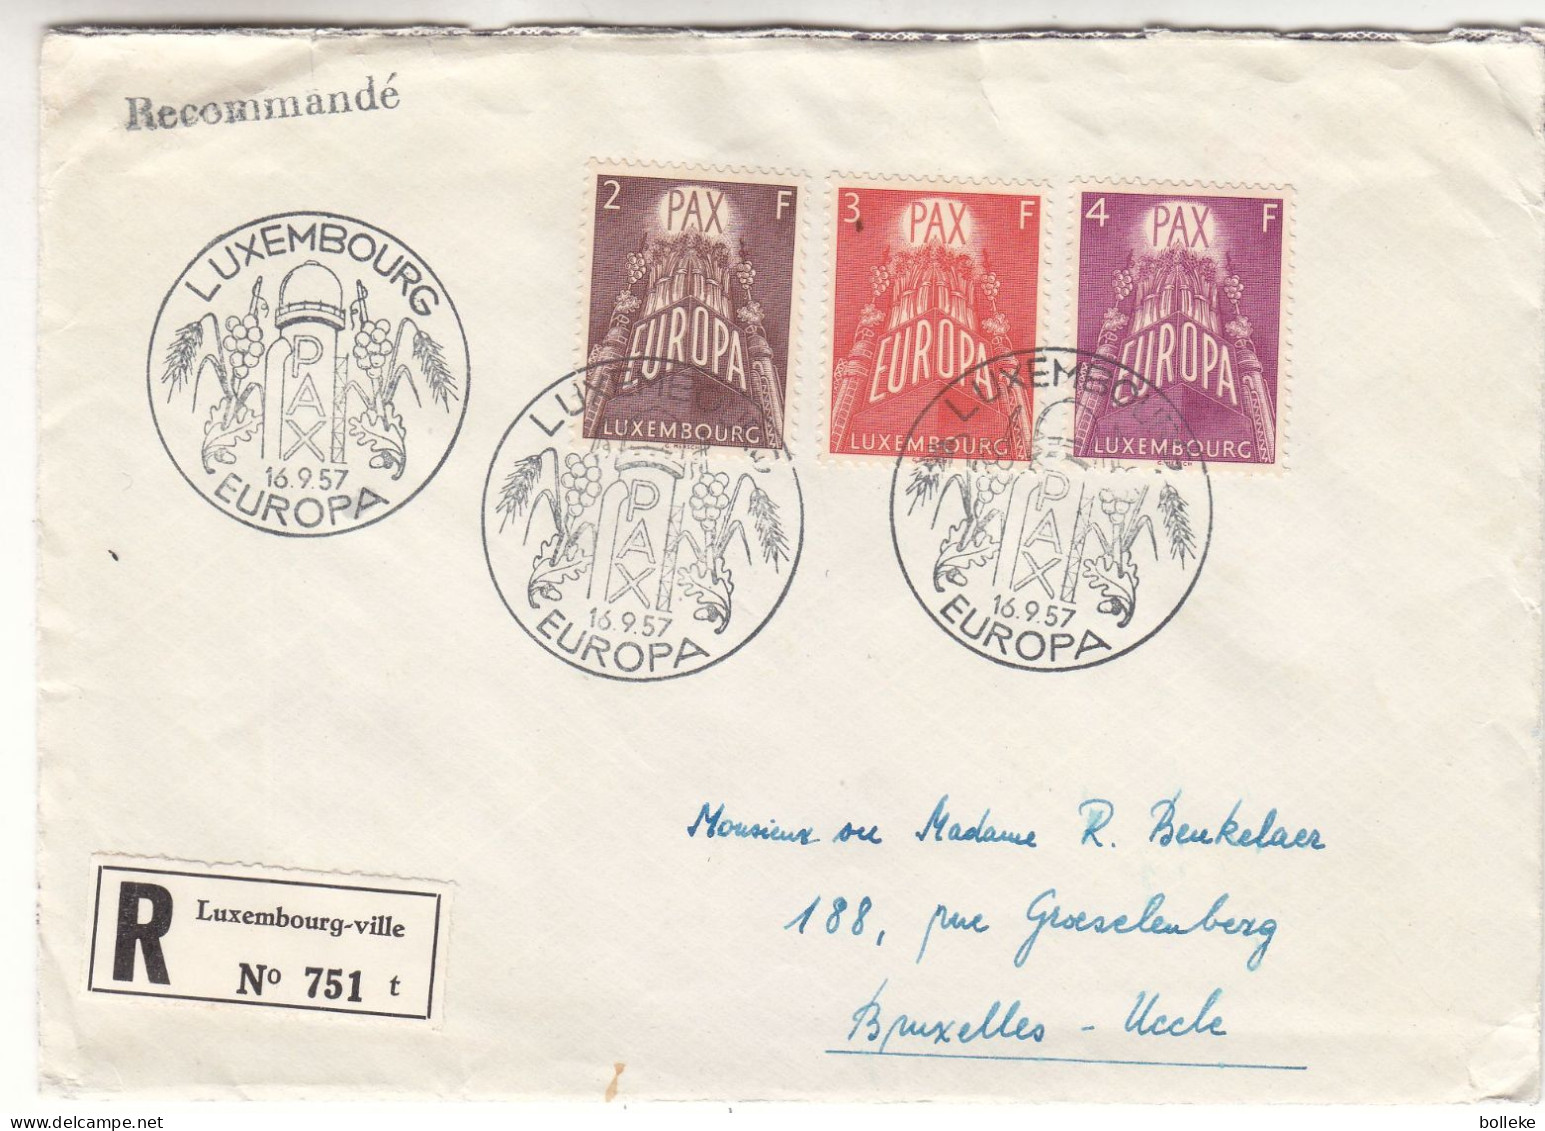 Luxembourg - Lettre FDC Recom De 1957 - Oblit Luxembourg - Europa 57 -  Valeur 75 Euros - Storia Postale